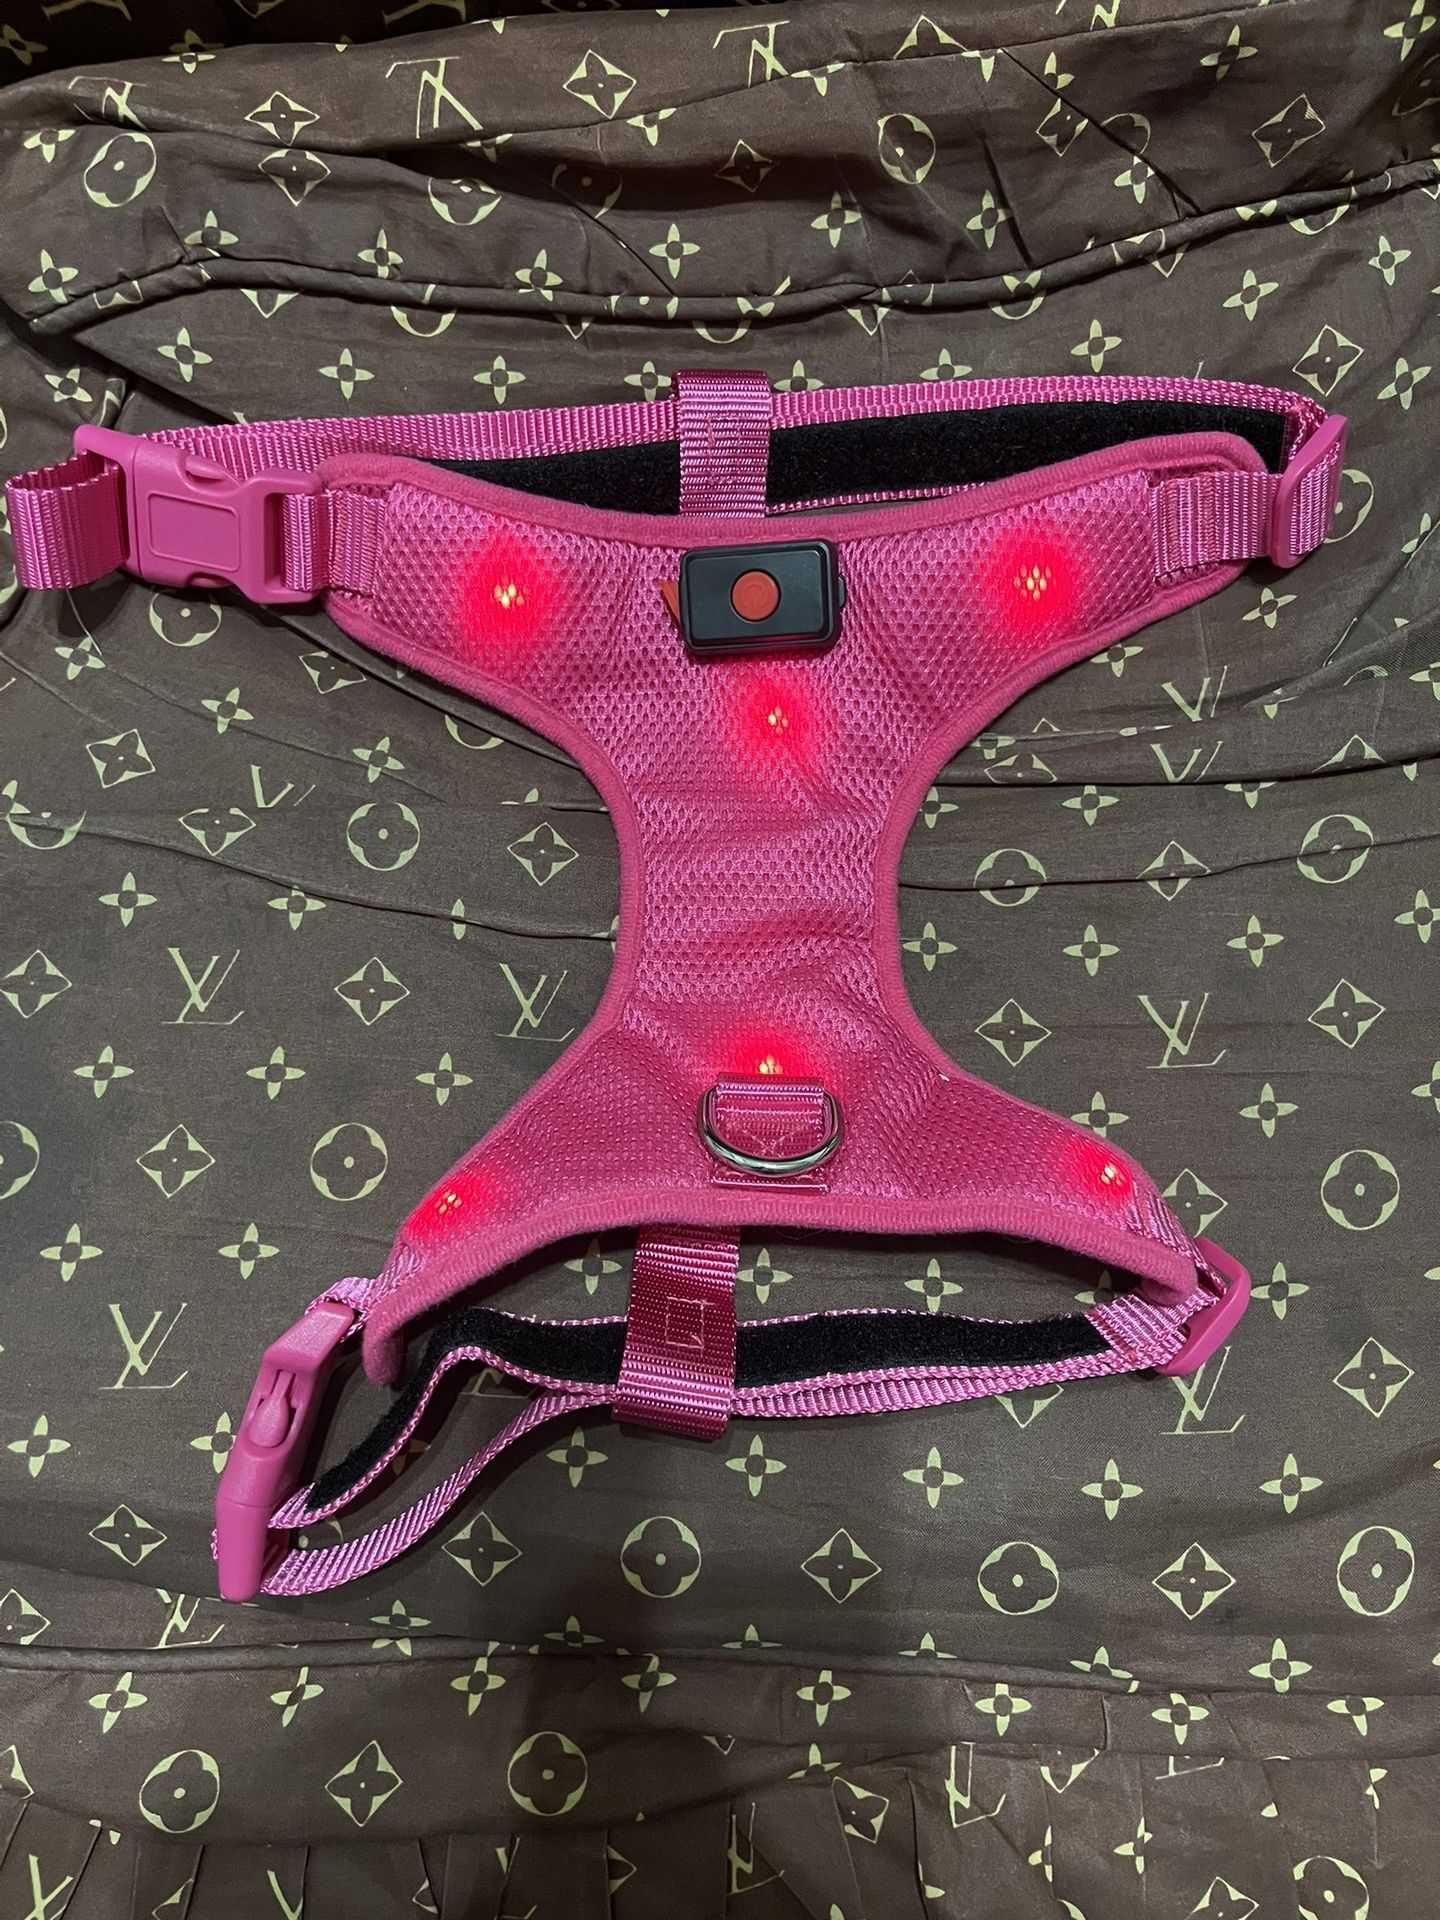 Brand New Large Pink Light Up Dog Harness $10 Firm FCFS 